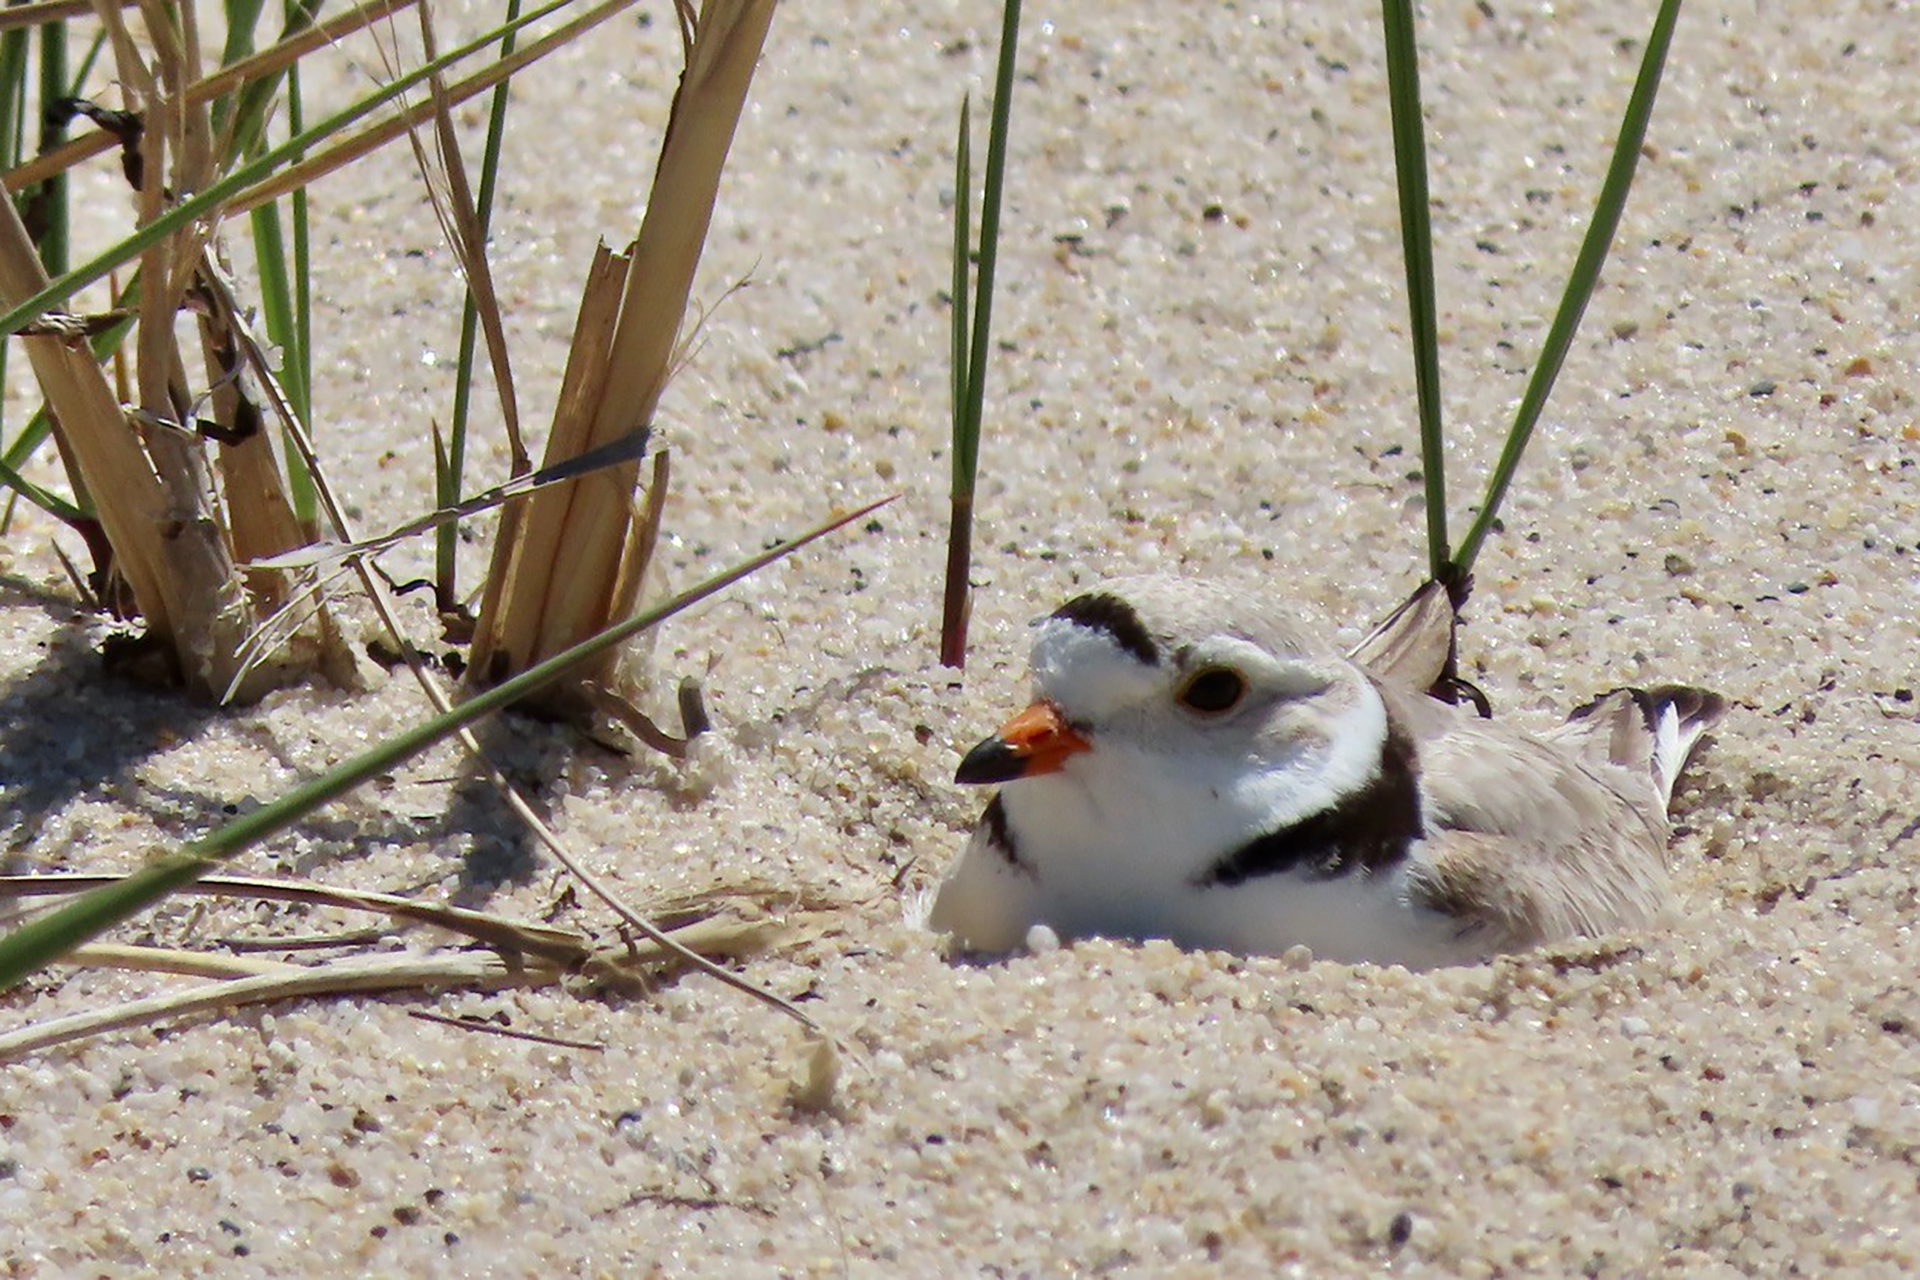 Tan, black, and white bird with orange beak sitting on sand dune up close